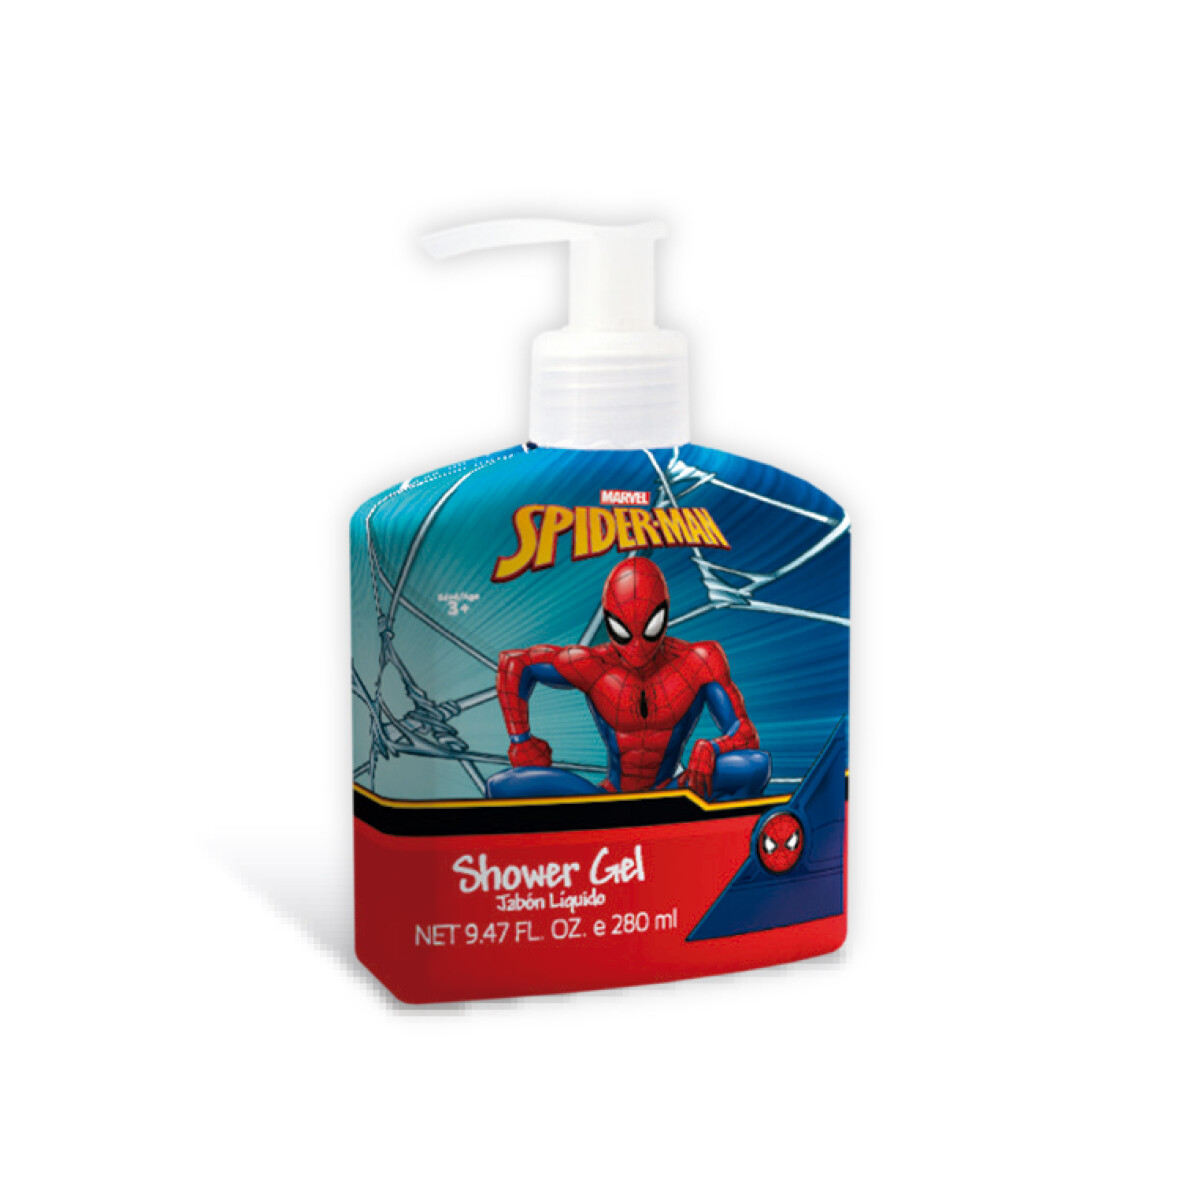 Jabon liquido disney - Spiderman a 